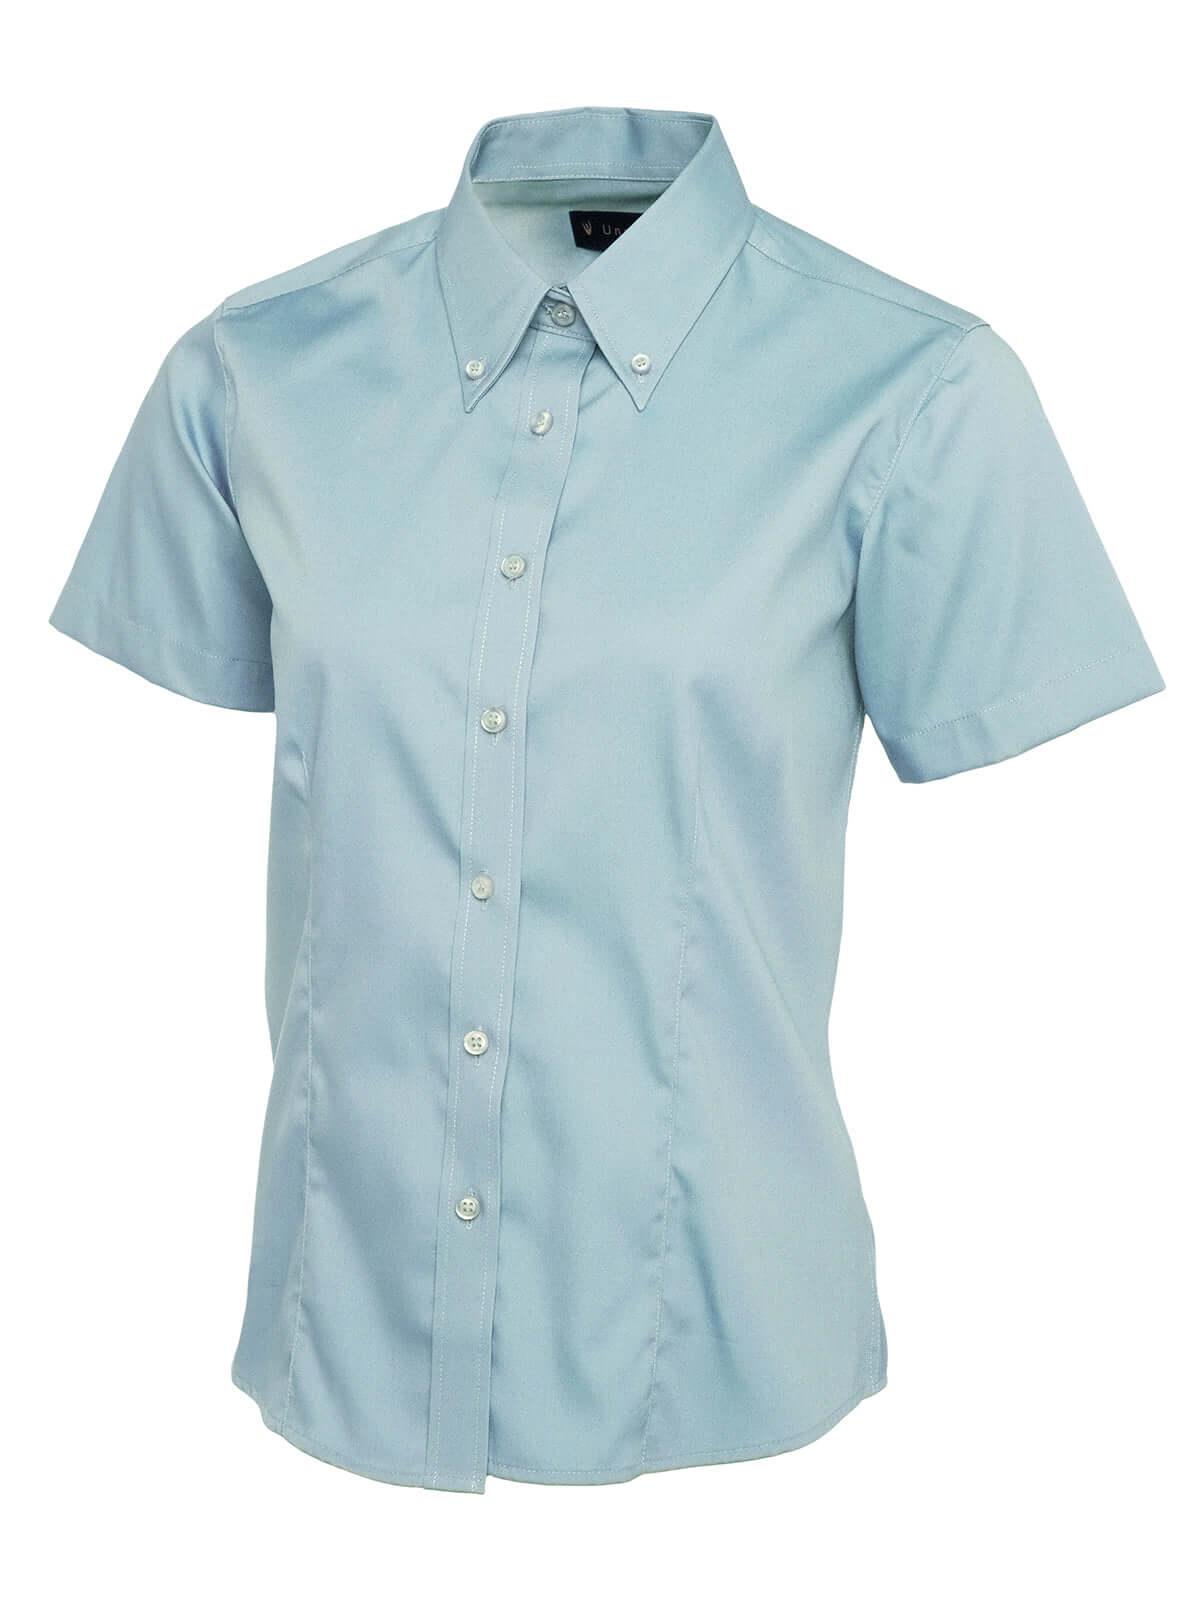 Pegasus Uniform Ladies Pinpoint Oxford Short Sleeve Shirt - Royal Blue